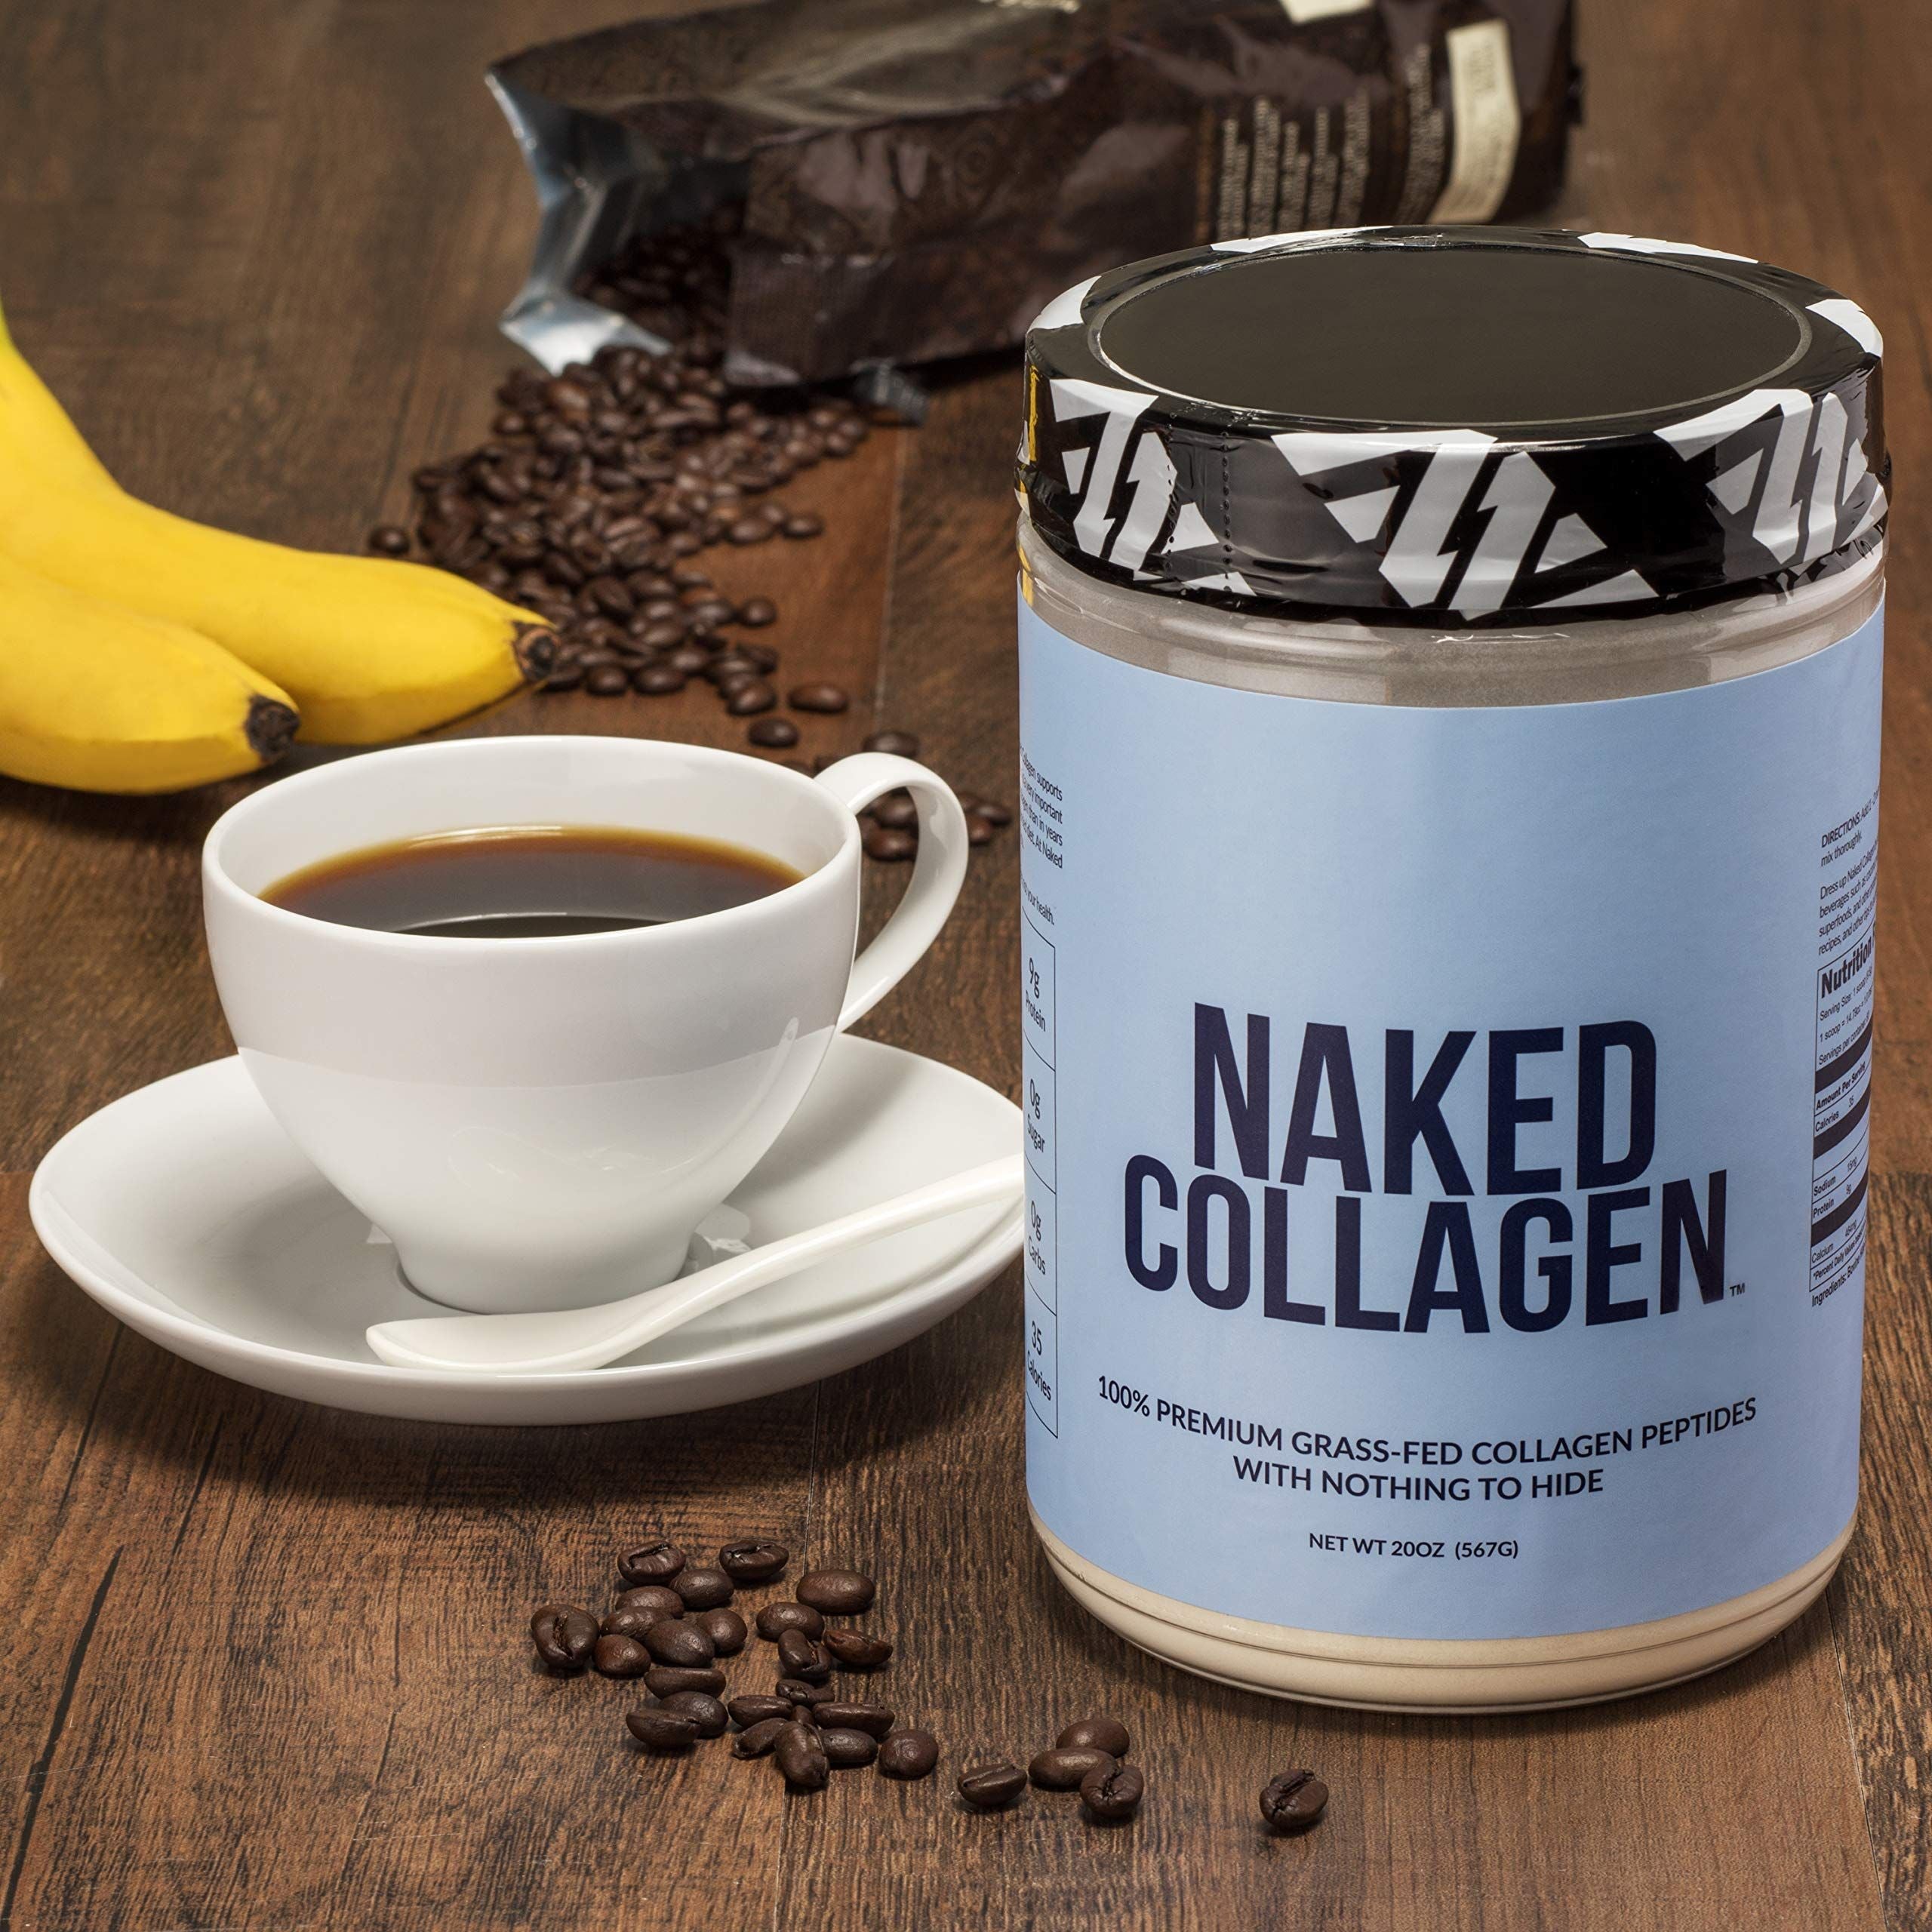 NAKED nutrition Naked Collagen - Collagen Peptides Protein Powder, 60 Servings Pasture-Raised, Grass-Fed Hydrolyzed Collagen Supplement | Paleo Friendly, Non-GMO, Keto, Gluten Free | Unflavored 20Oz